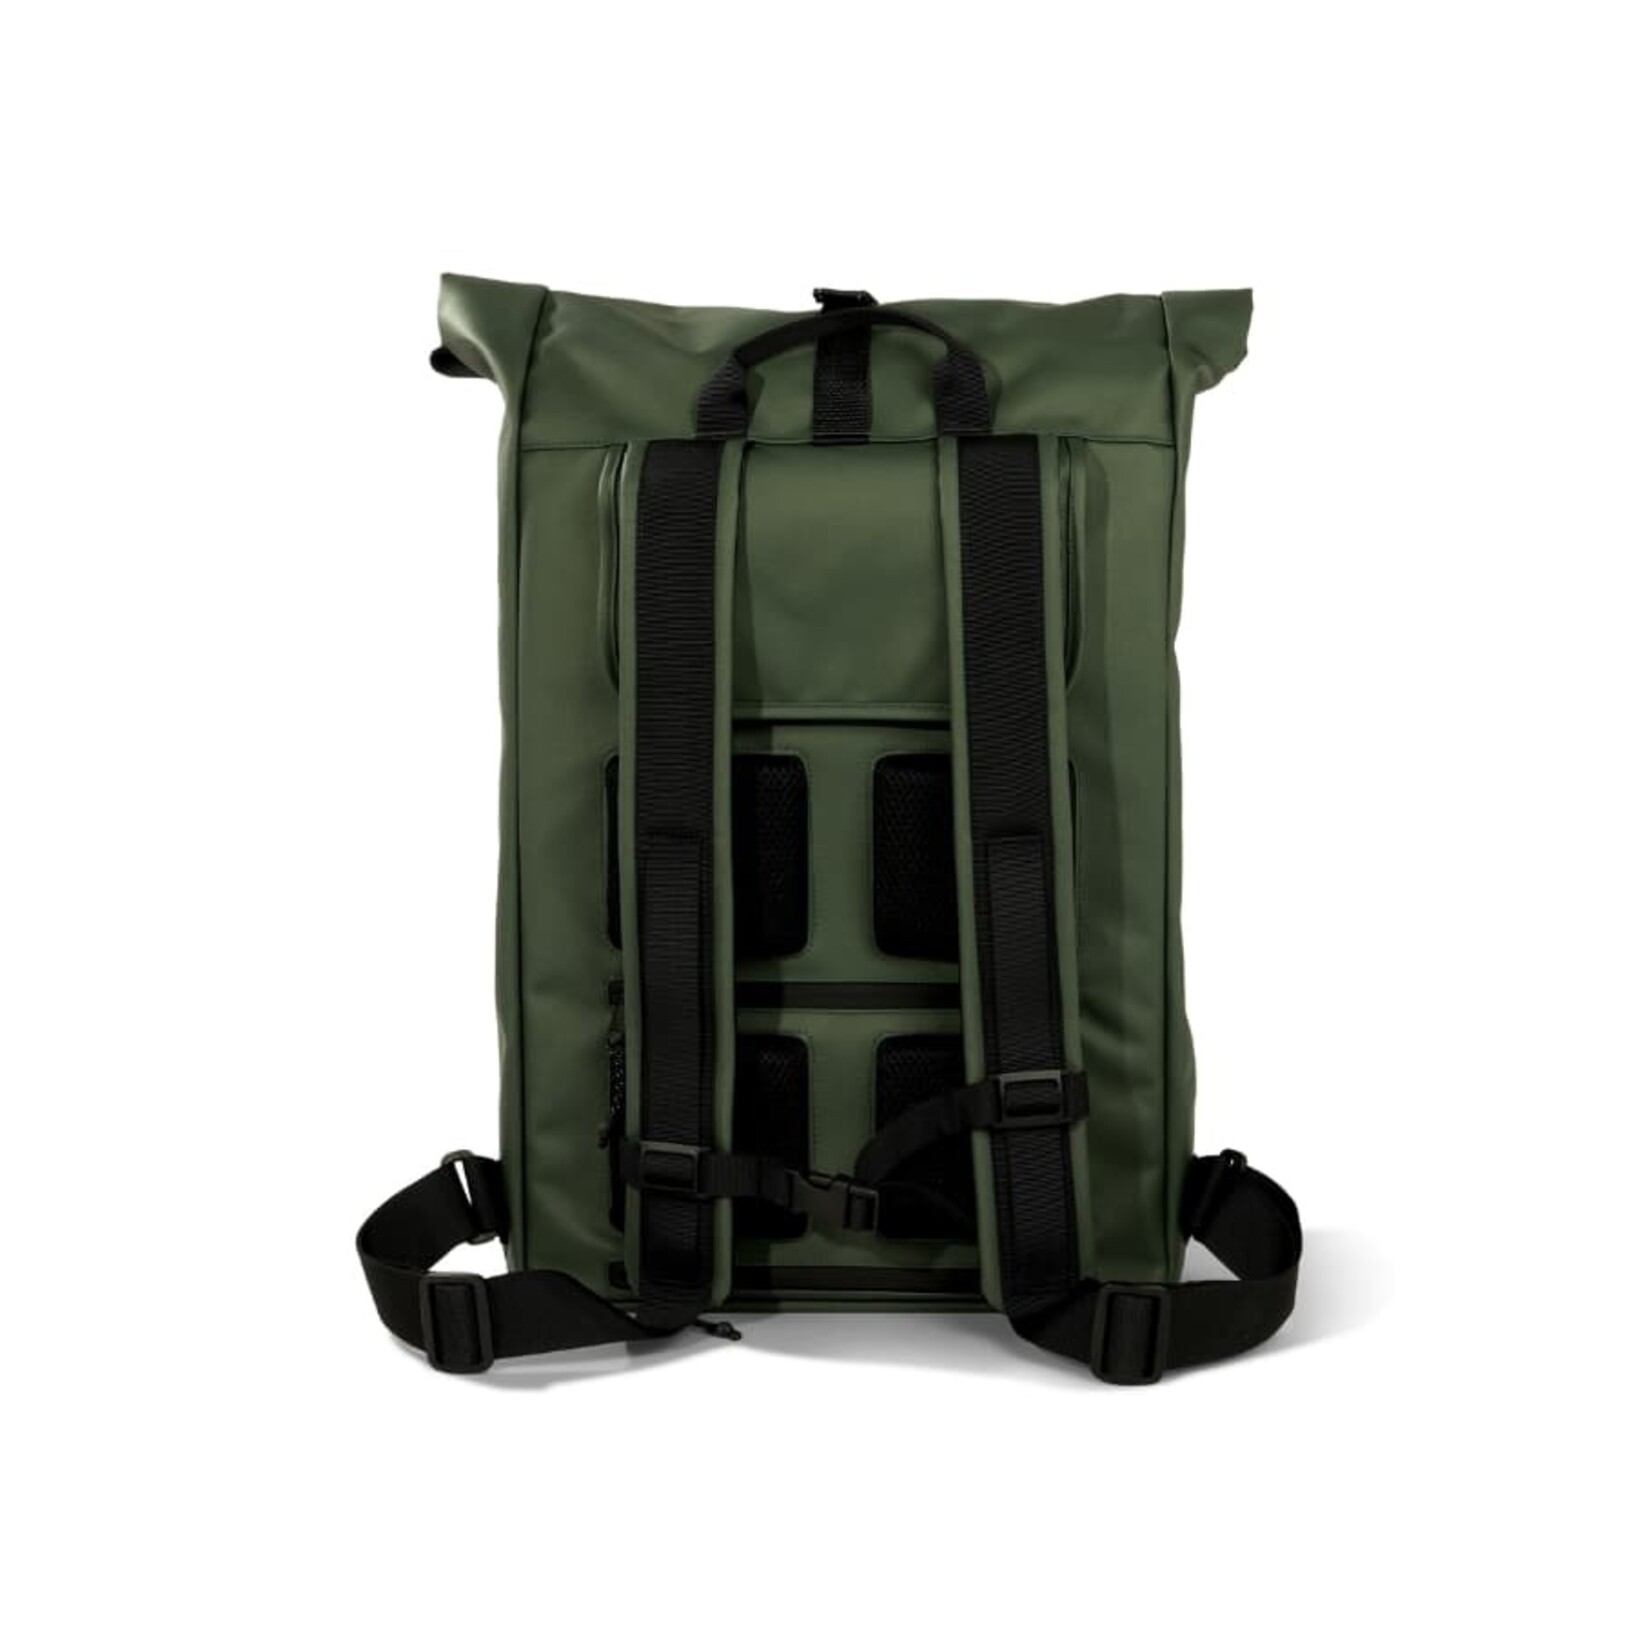 Urban Proof Urban Proof - Rolltop Backpack 20L- Groen